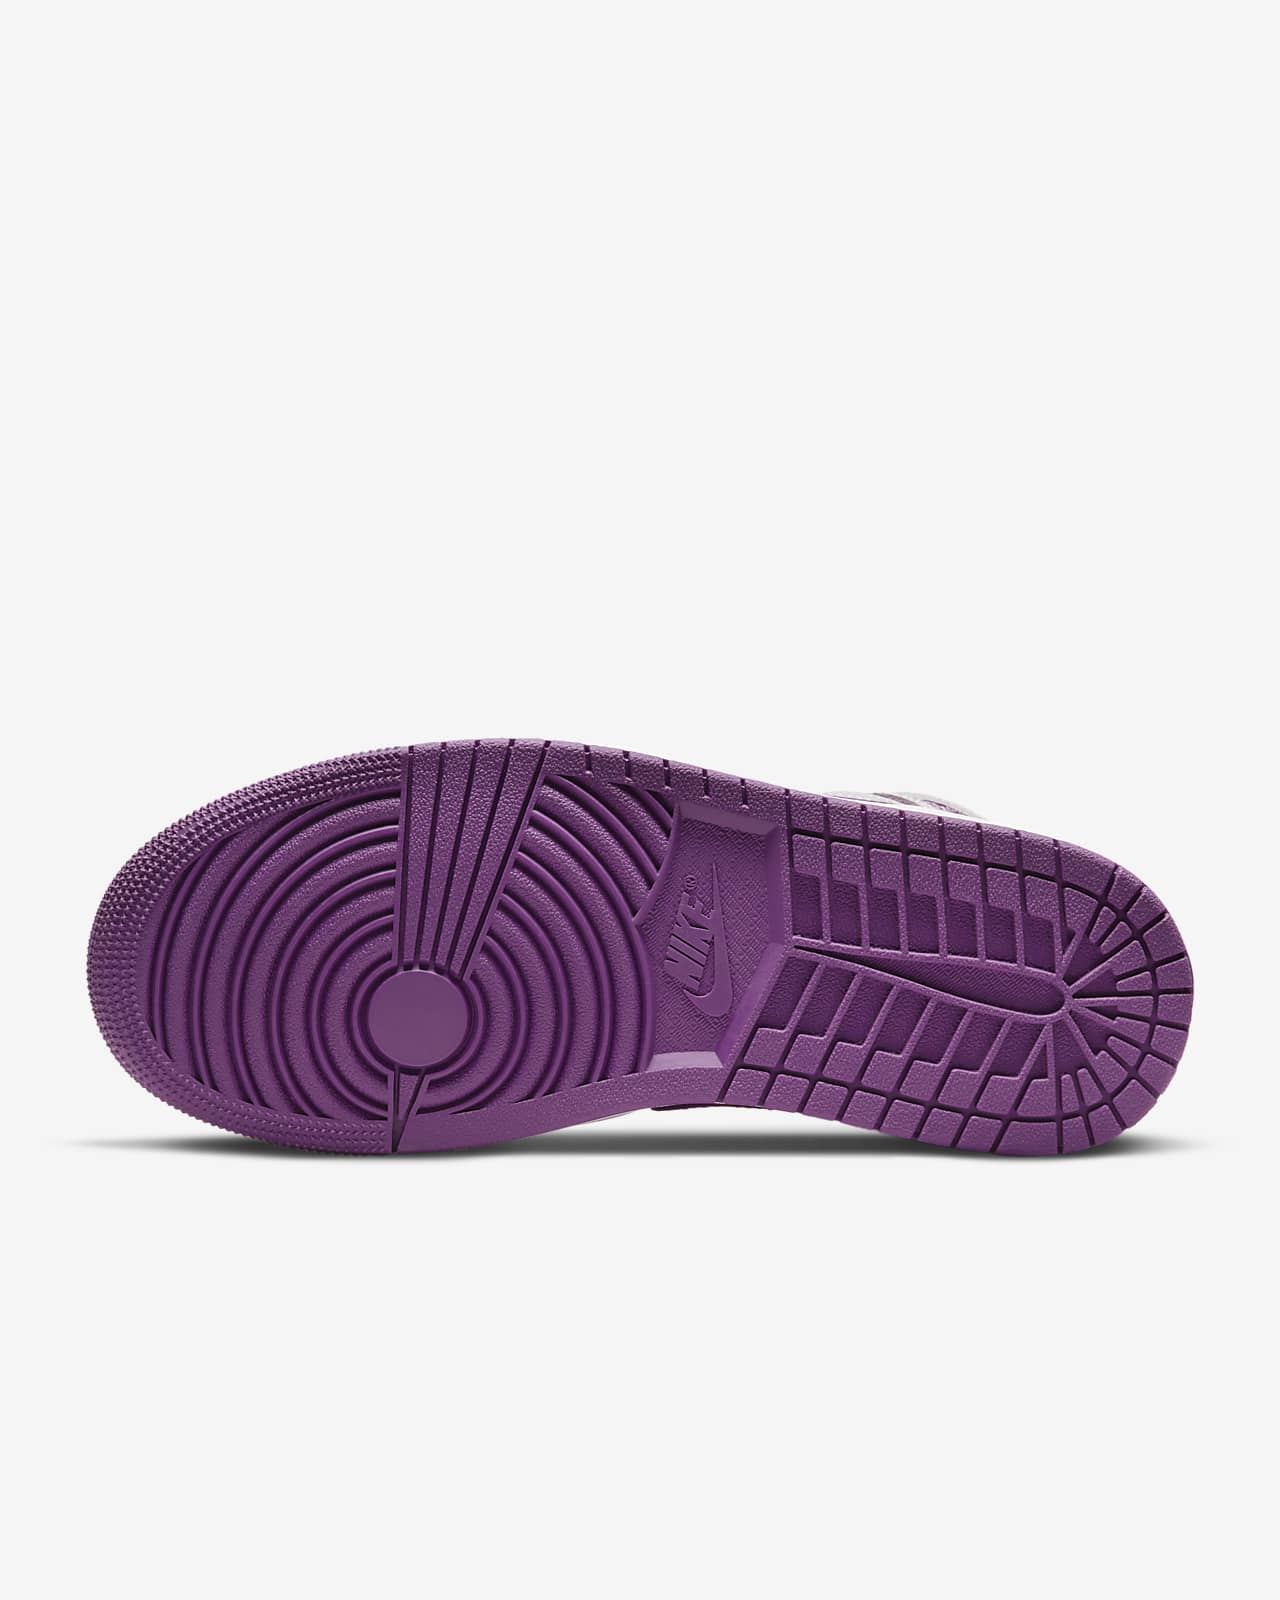 air jordan 1 court purple mid Women's Shoe